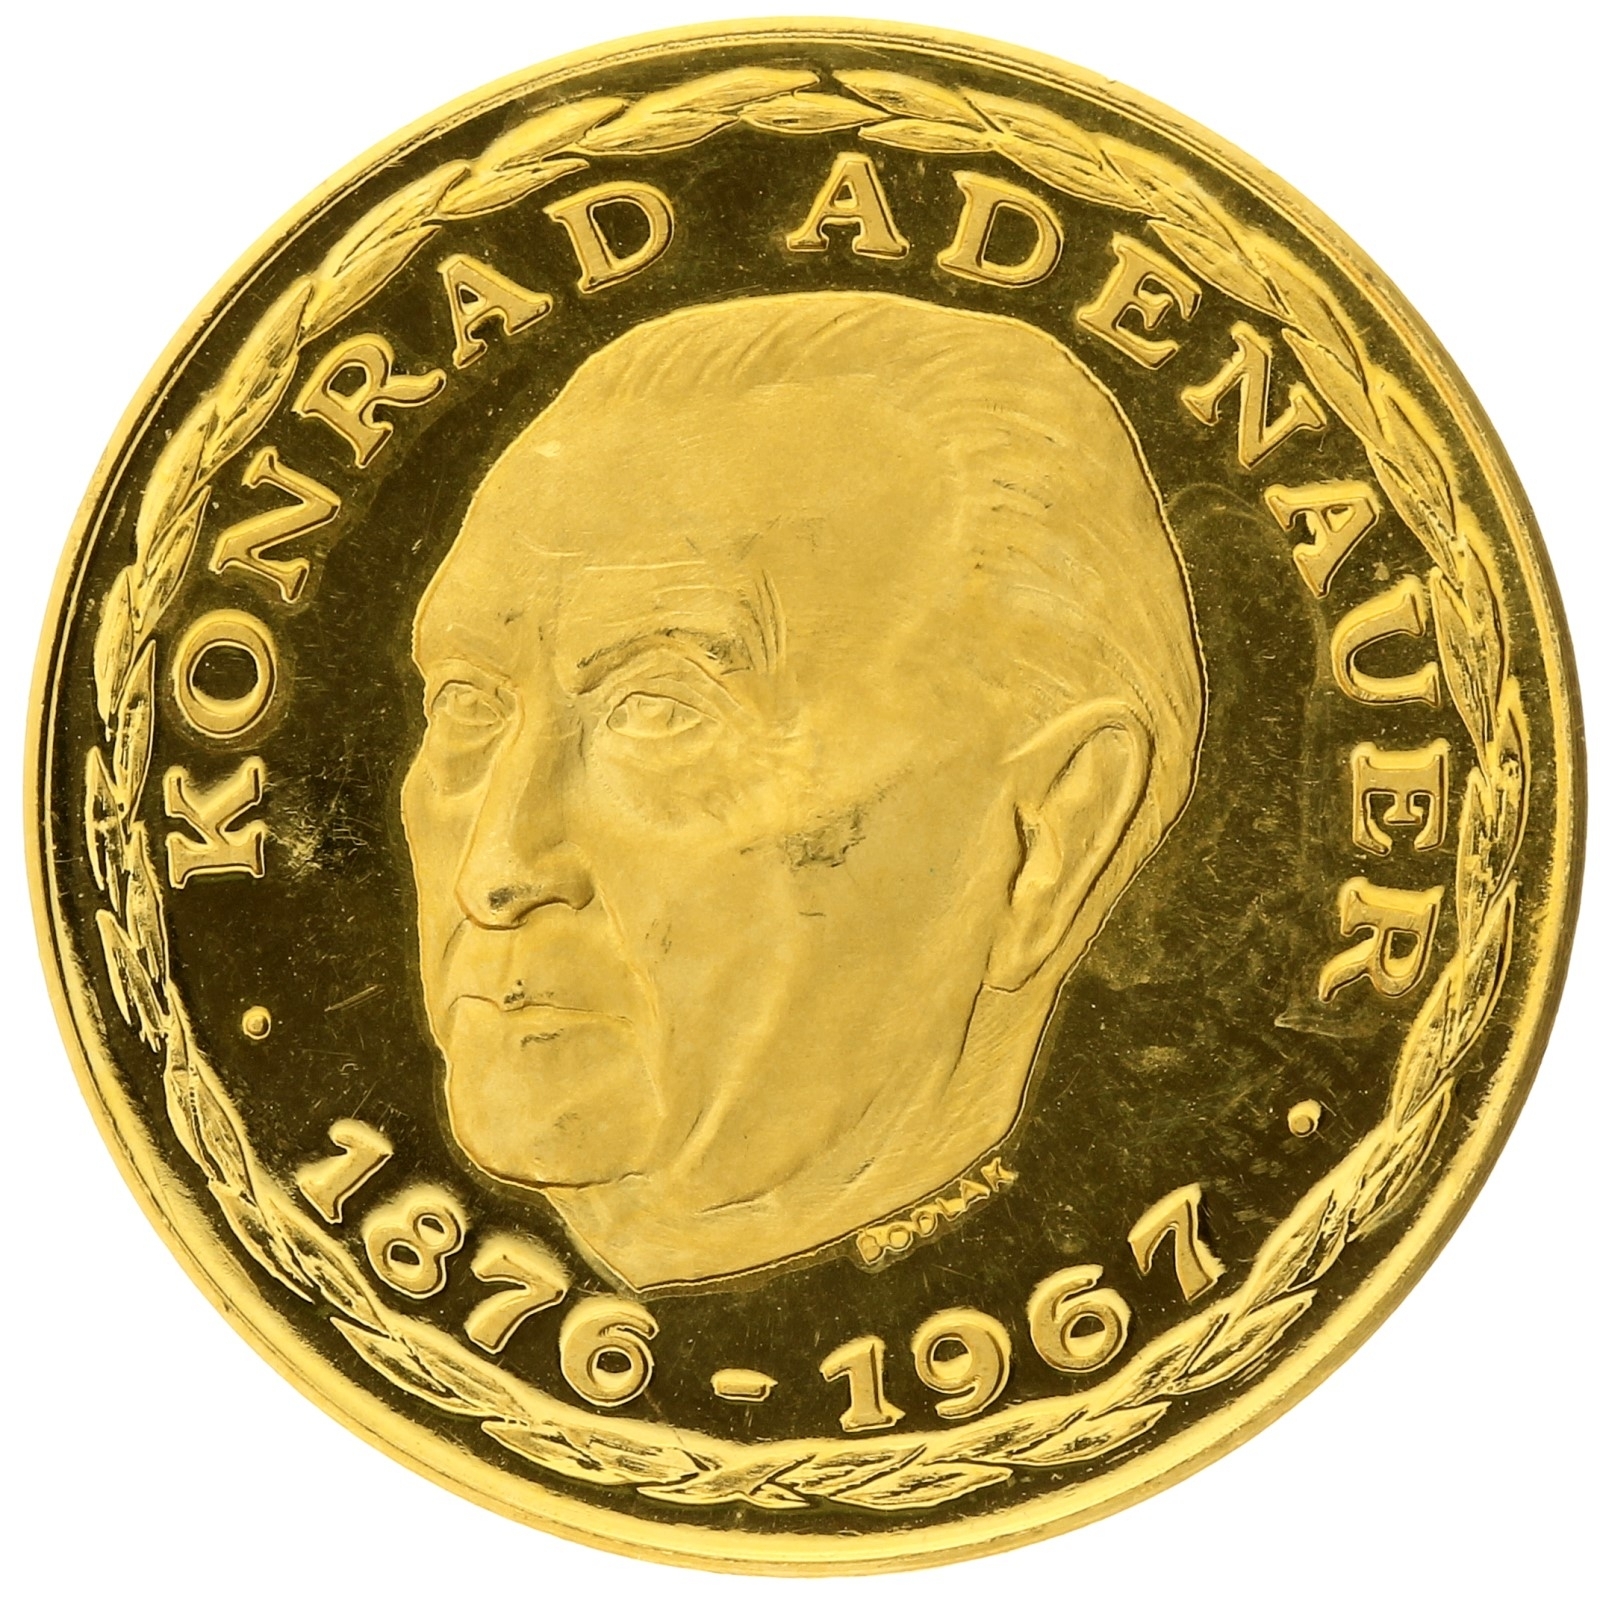 Germany - Medal - 1967 - Konrad Adenauer